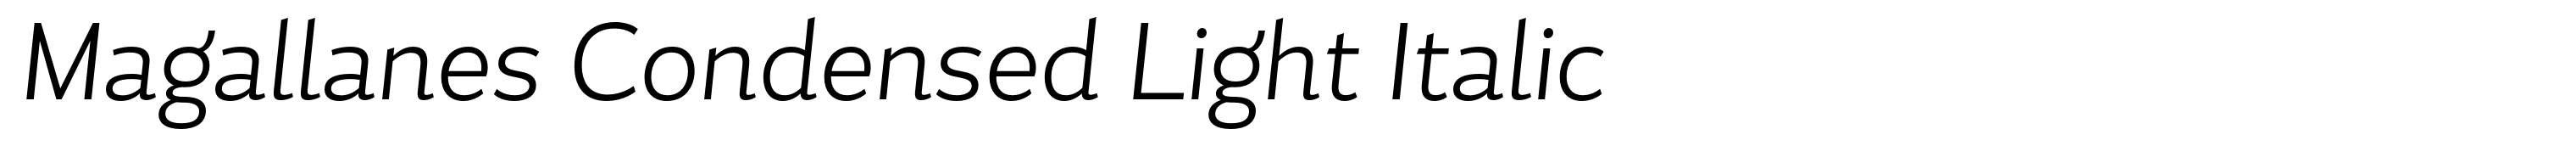 Magallanes Condensed Light Italic